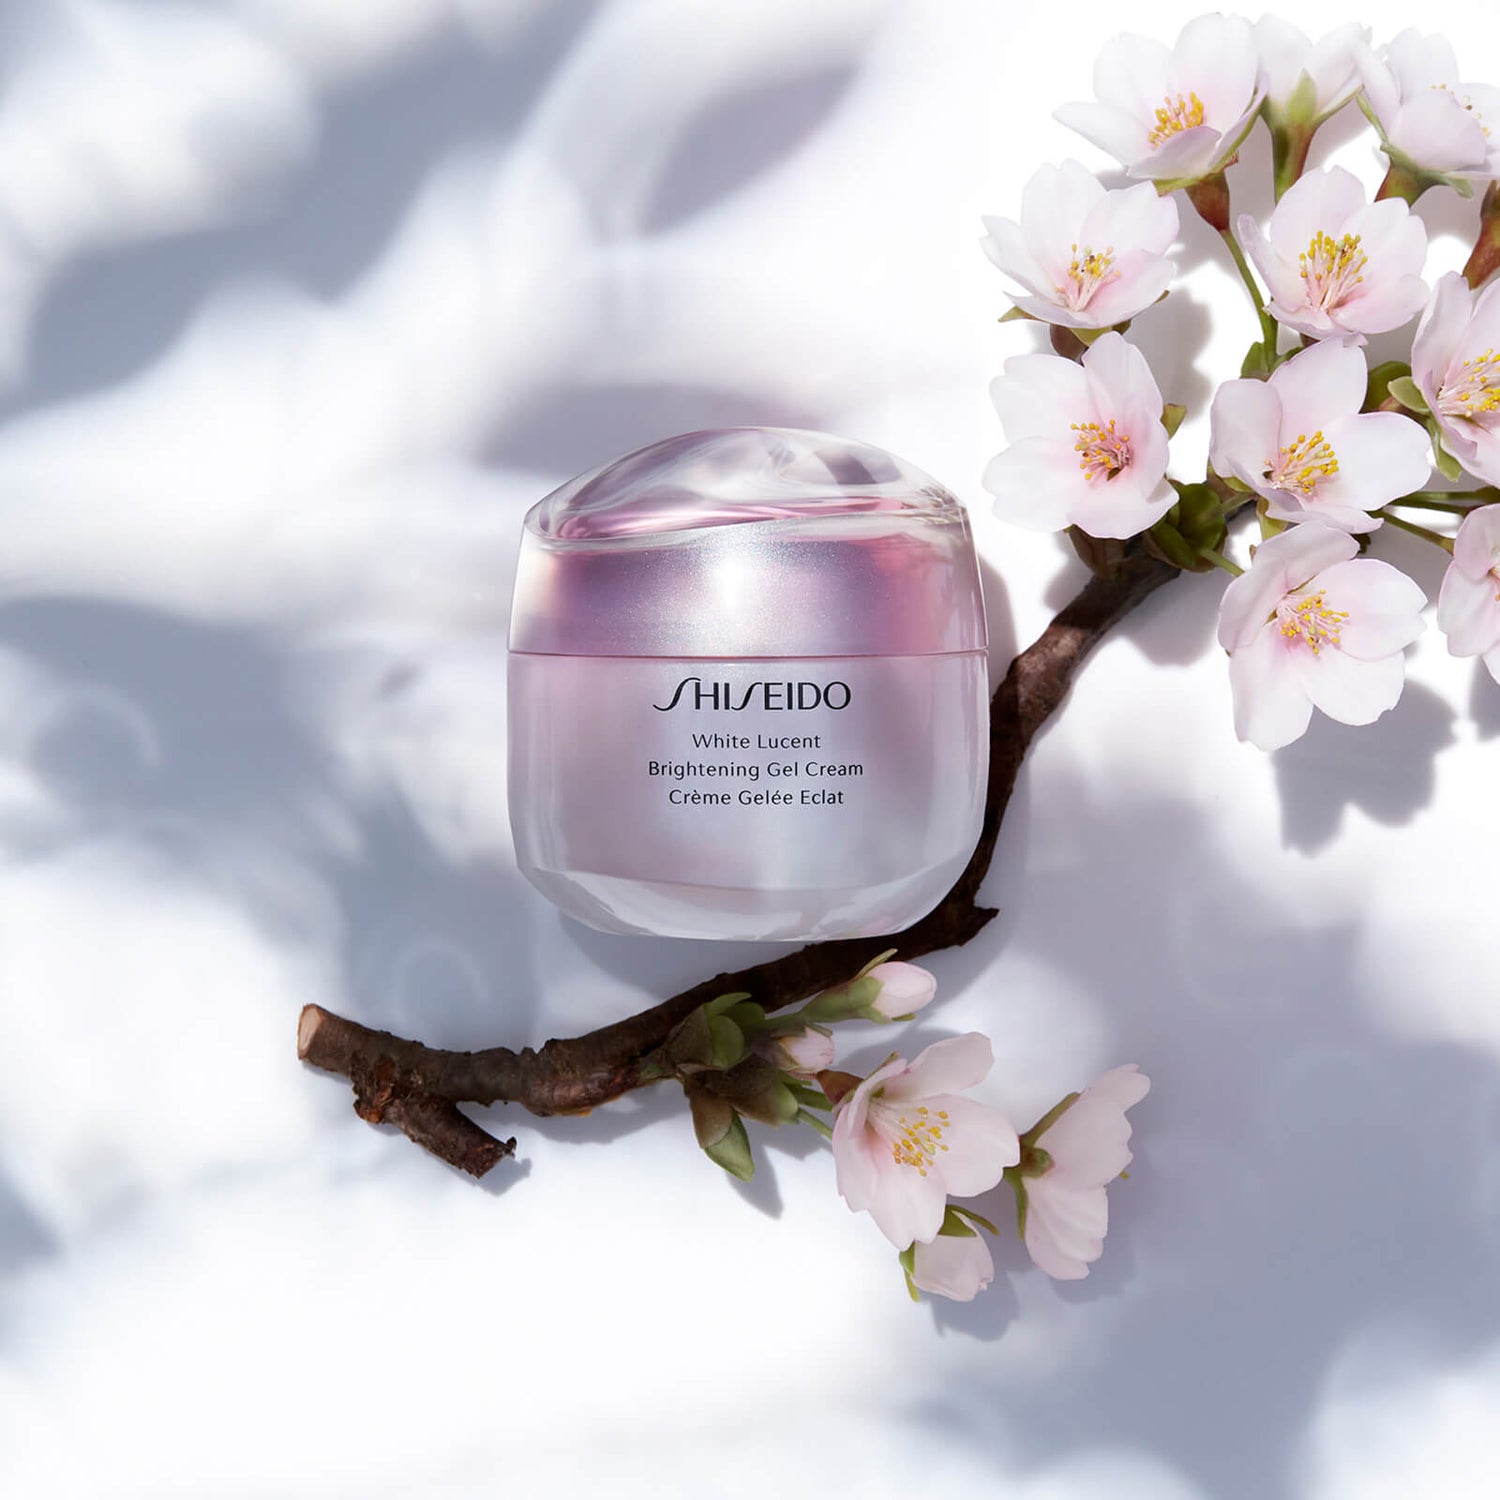 Shiseido White Lucent Brightening Gel Cream